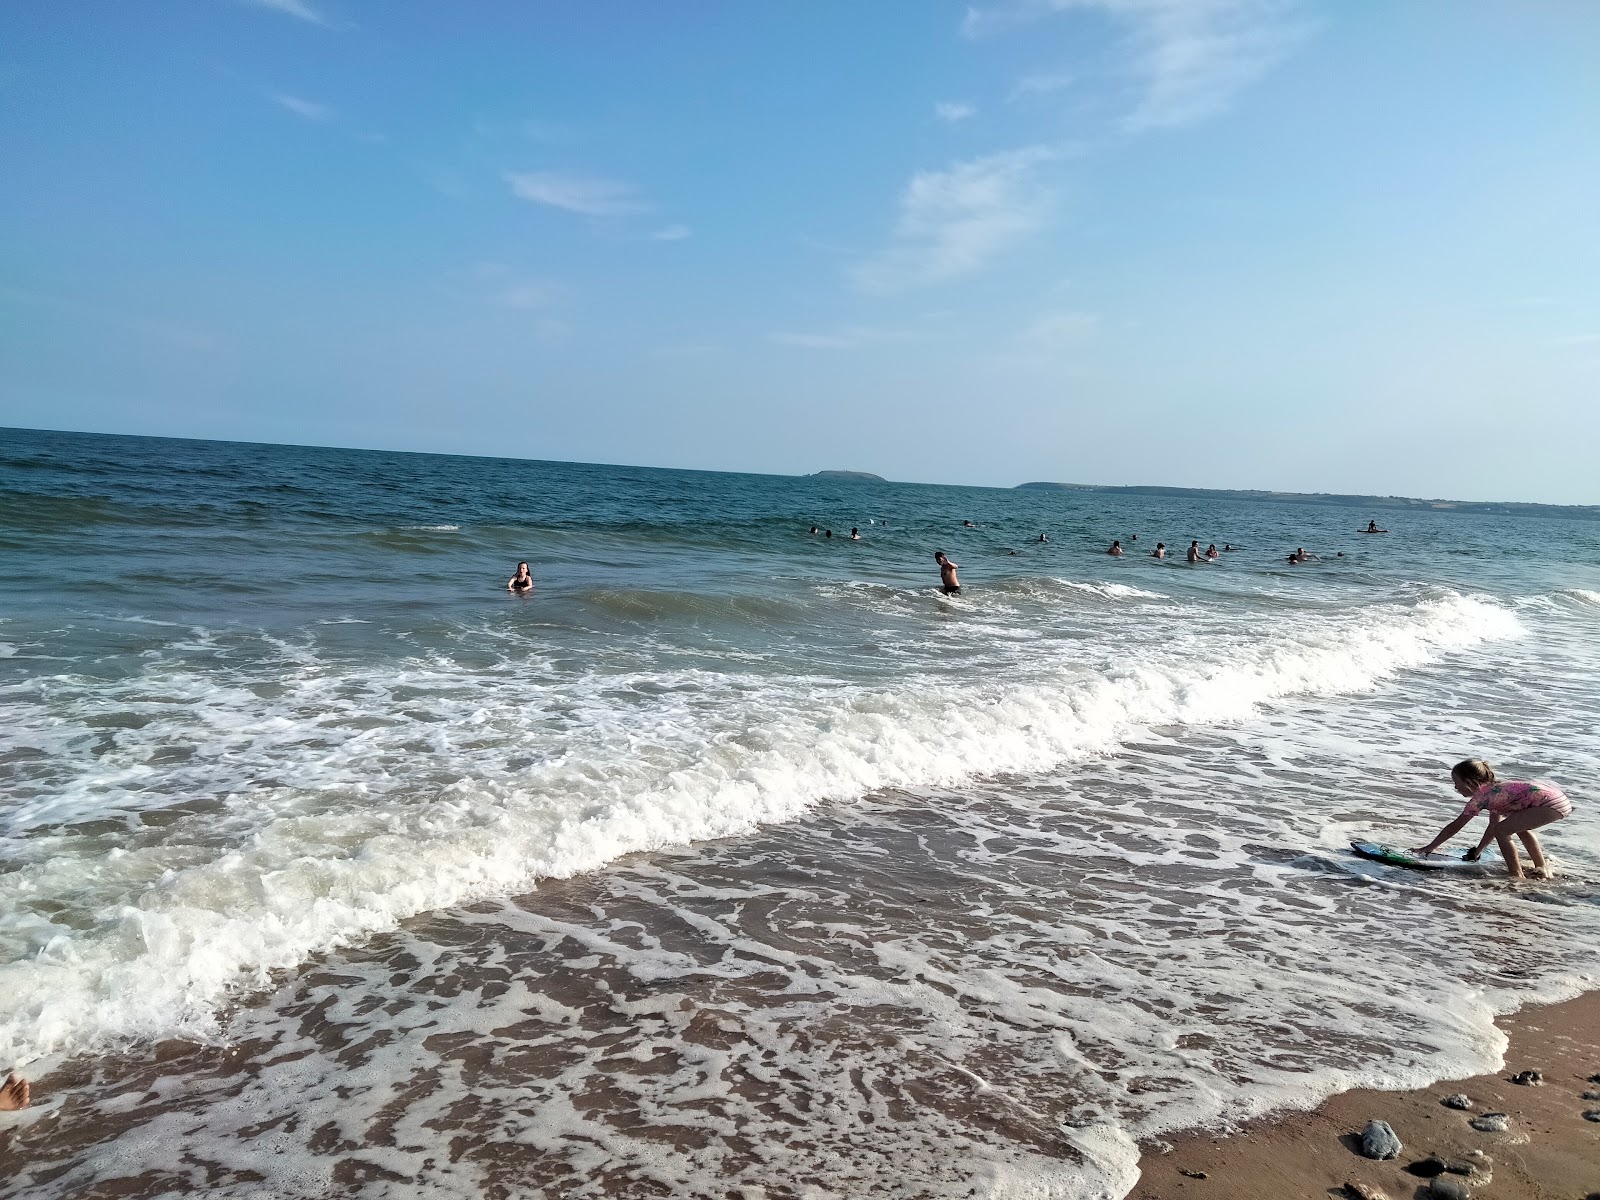 Fotografie cu Youghal Beach - locul popular printre cunoscătorii de relaxare